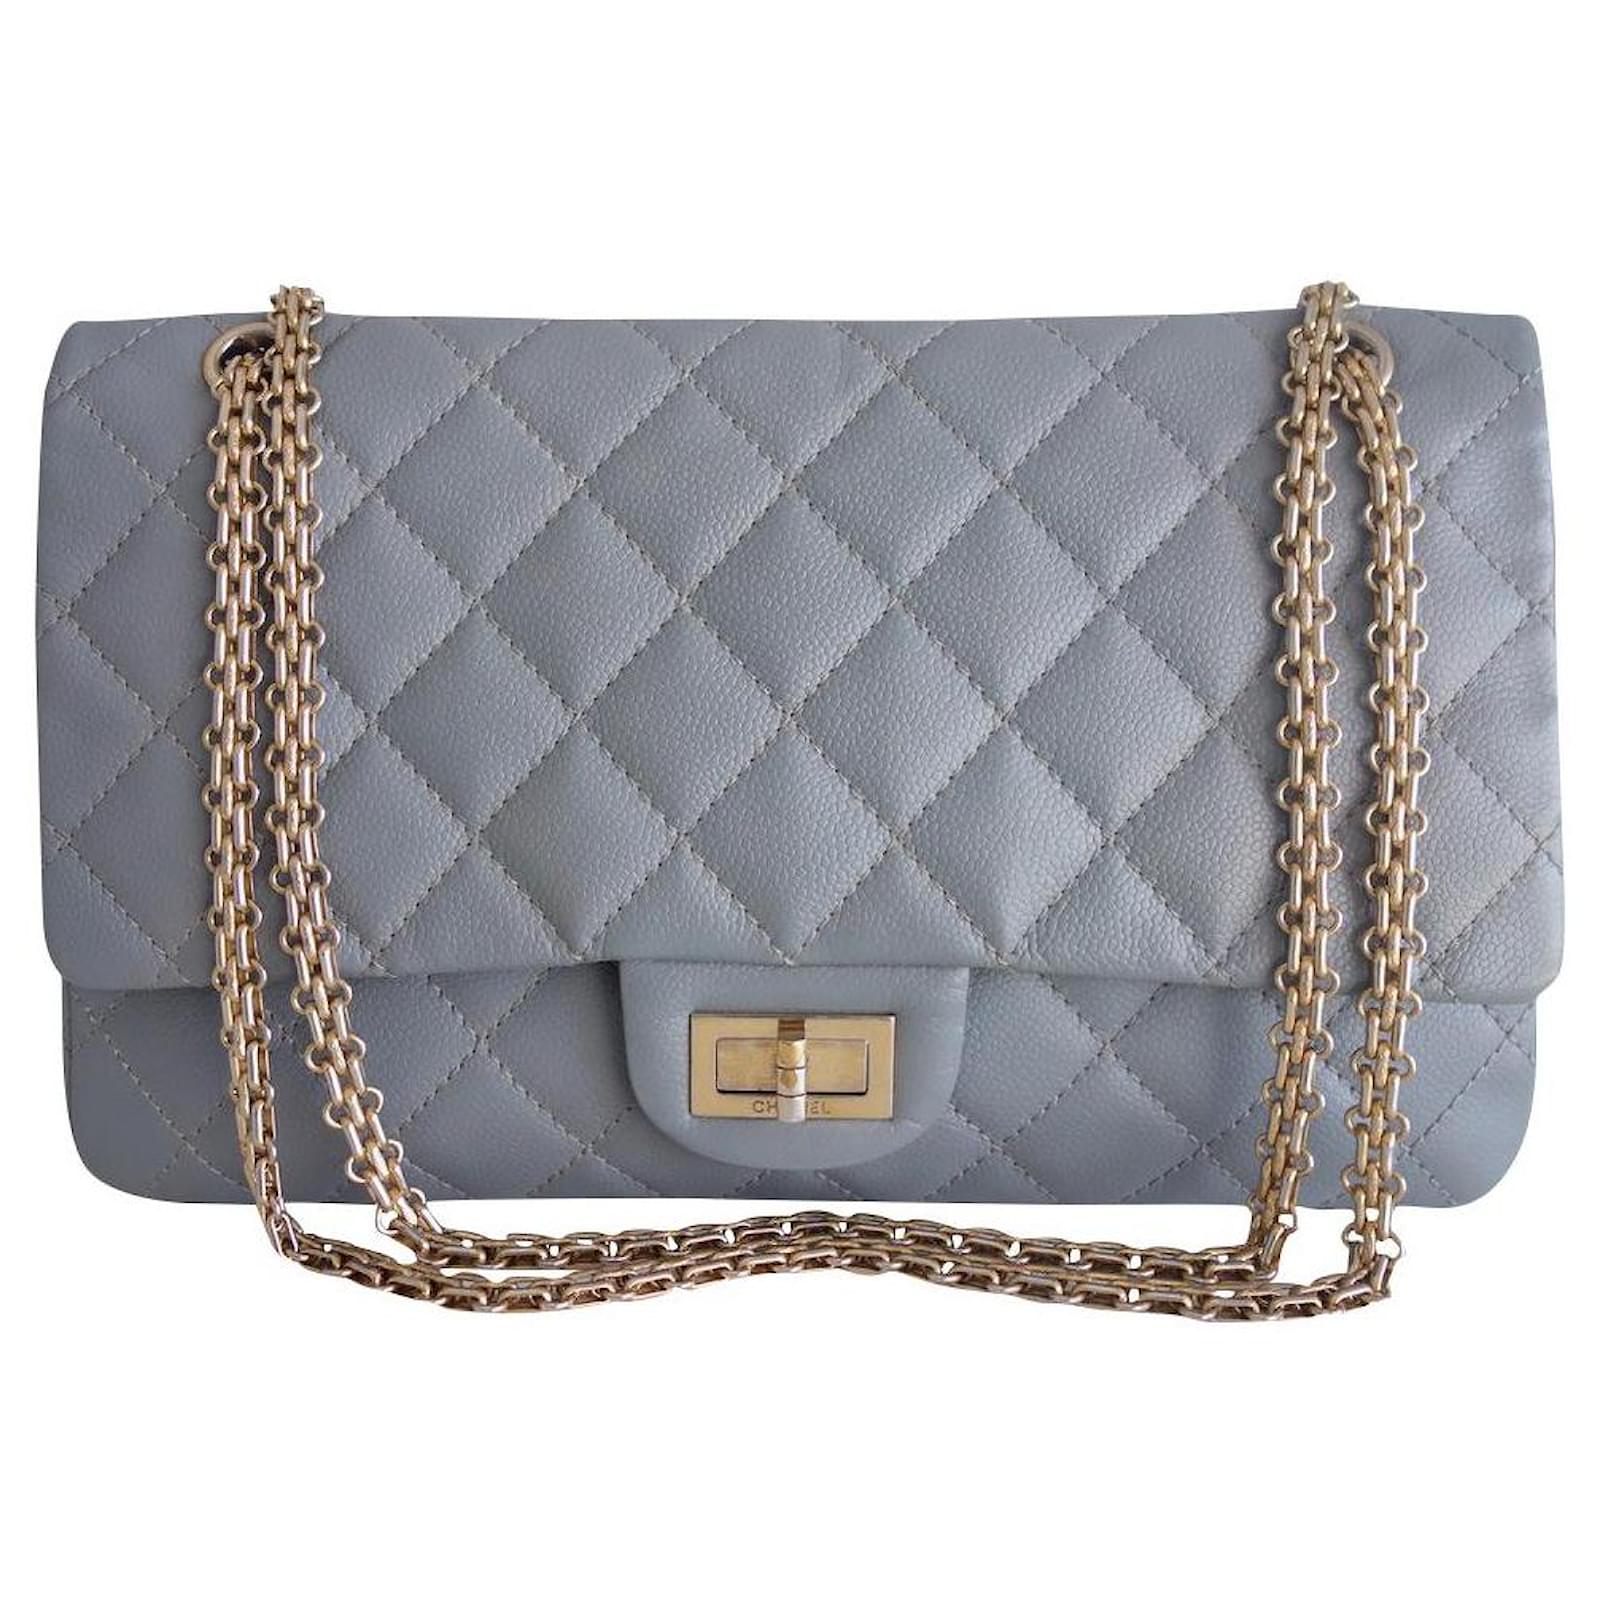 Handbags Chanel Chanel Bag 2.55 Gris